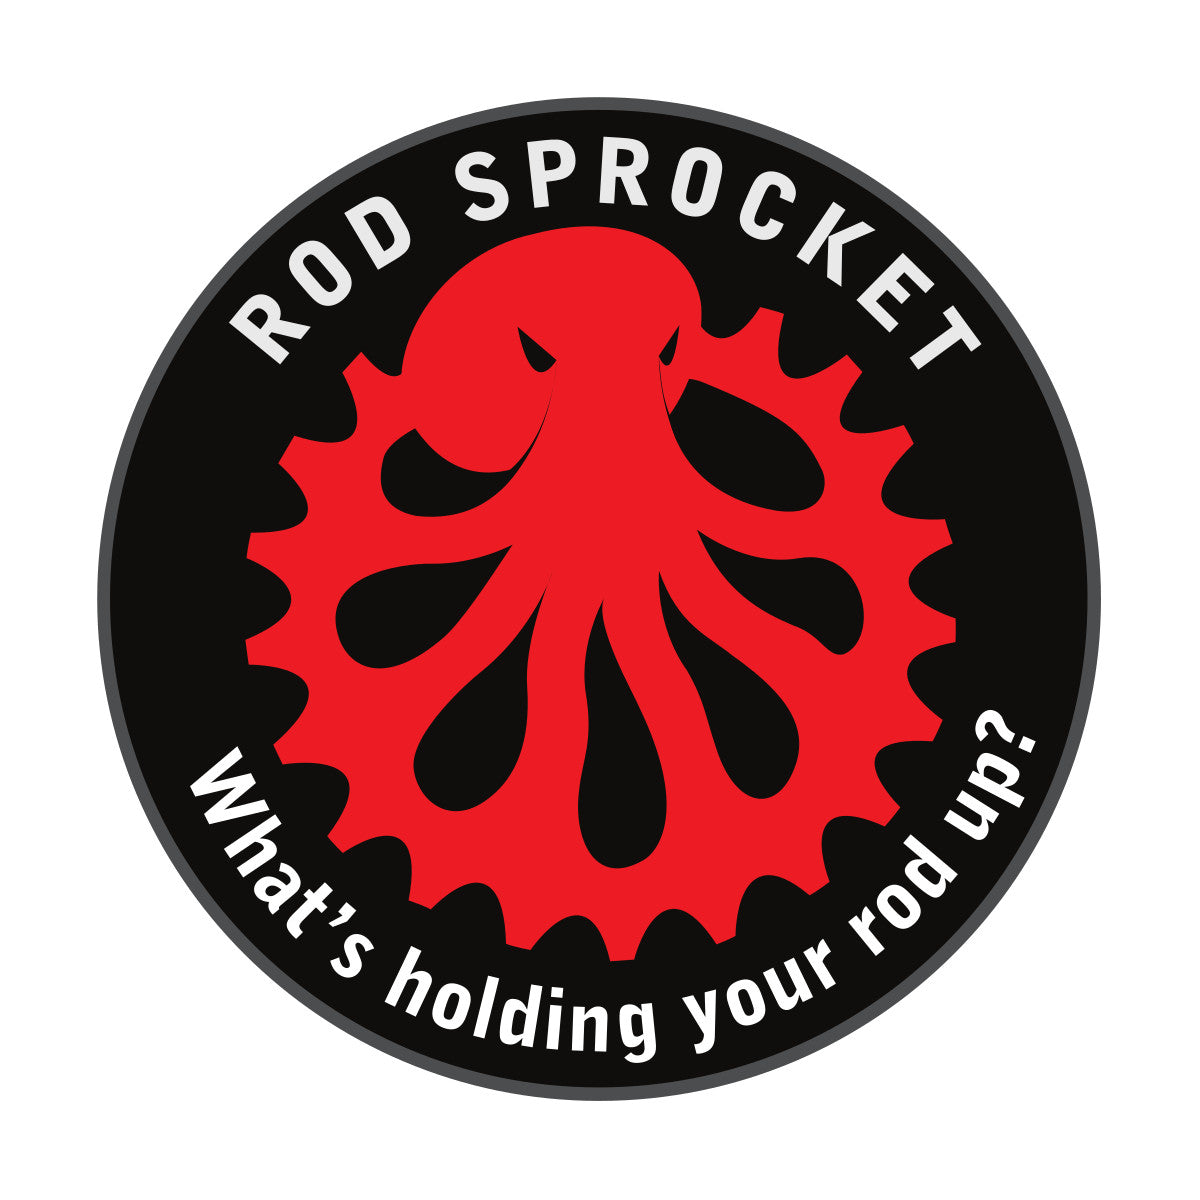 Rod Sprocket - All-Terrain Shoreline Bank Fishing Rod Holder